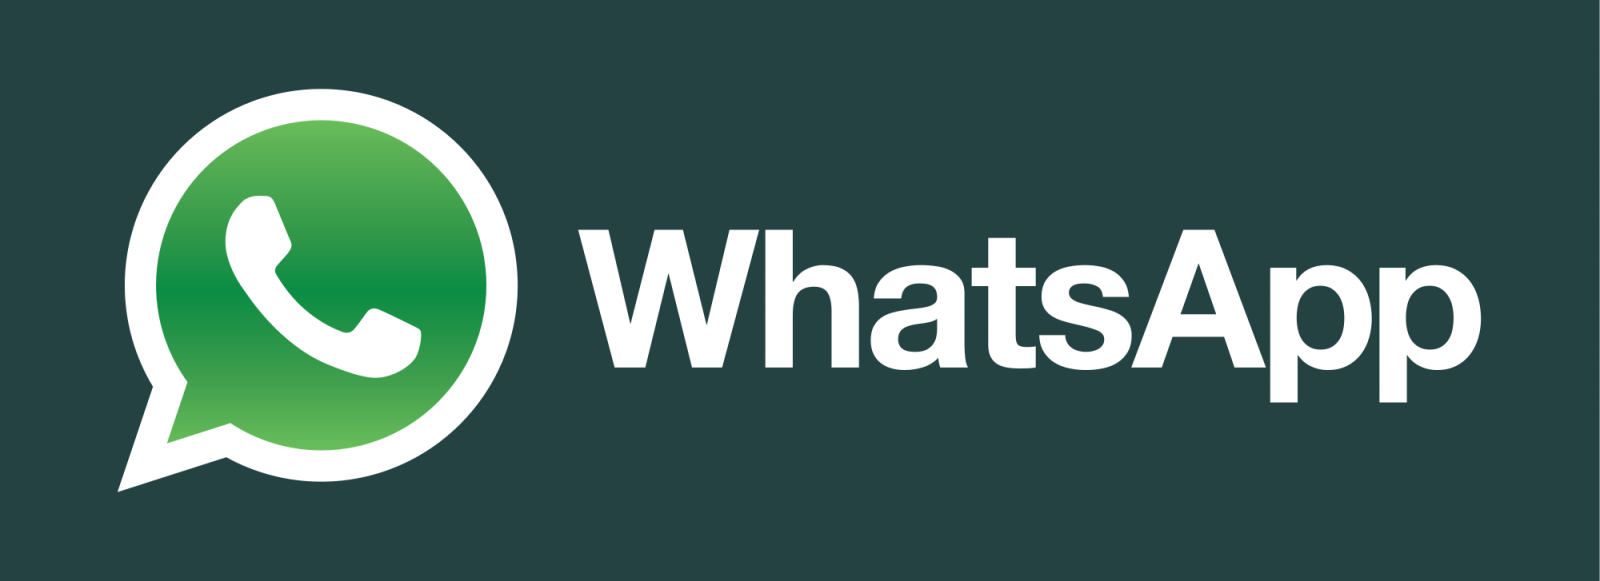 WhatsApp_logo.svg_.png